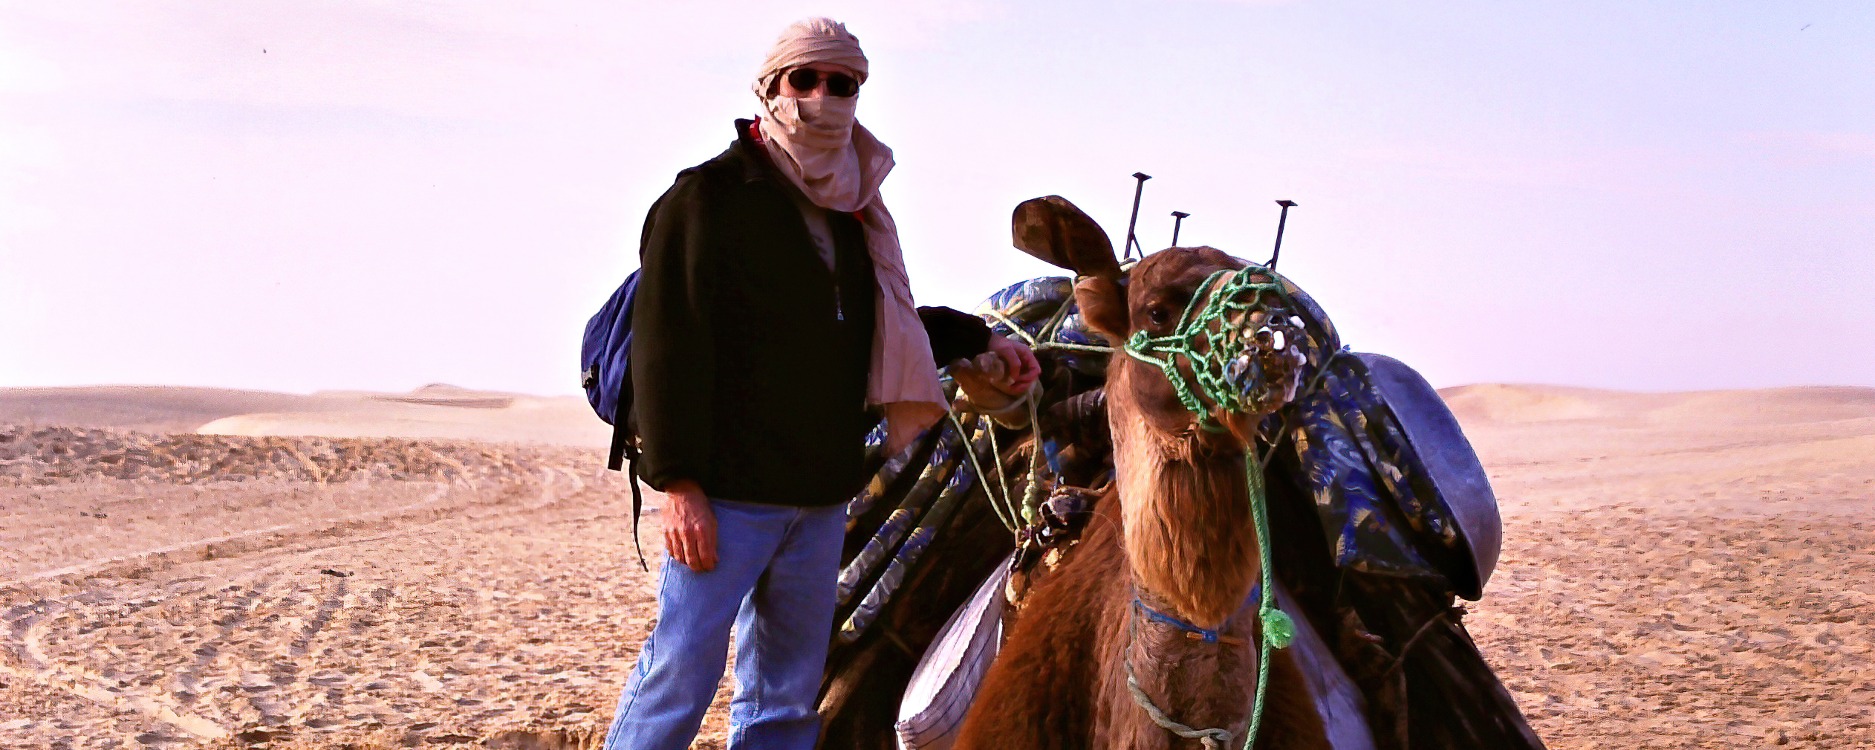 Steve and Hogar at the start of the camel trek in Douz, Tunisia-SAI-focus_1875x750